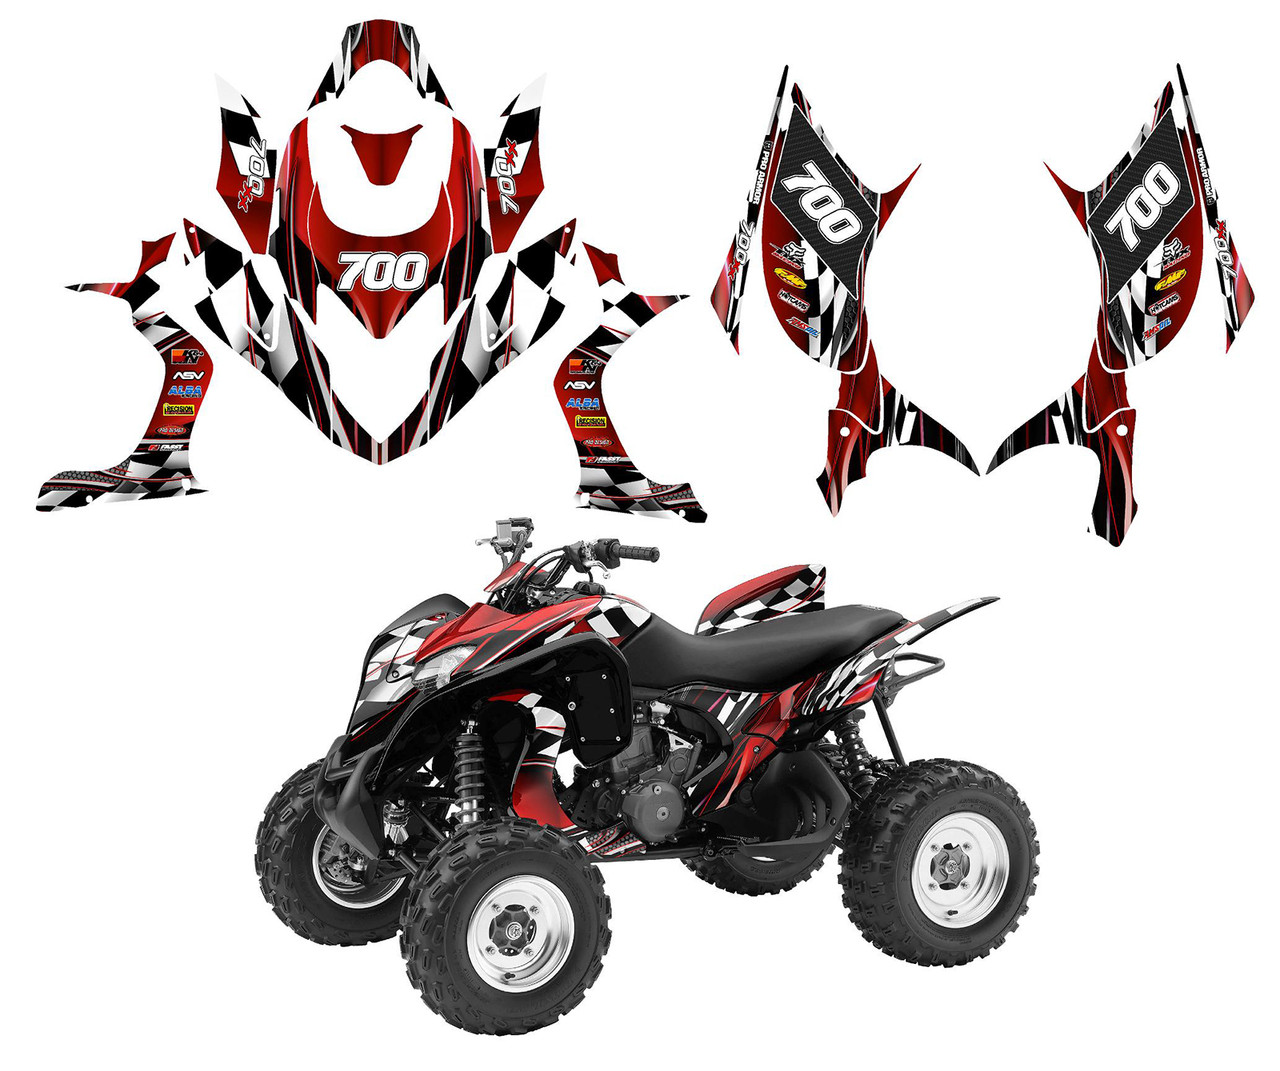 Yamaha Raptor 700 R custom graphics kit 2013 2014 2015 2016 2017 2018 #2500  Red